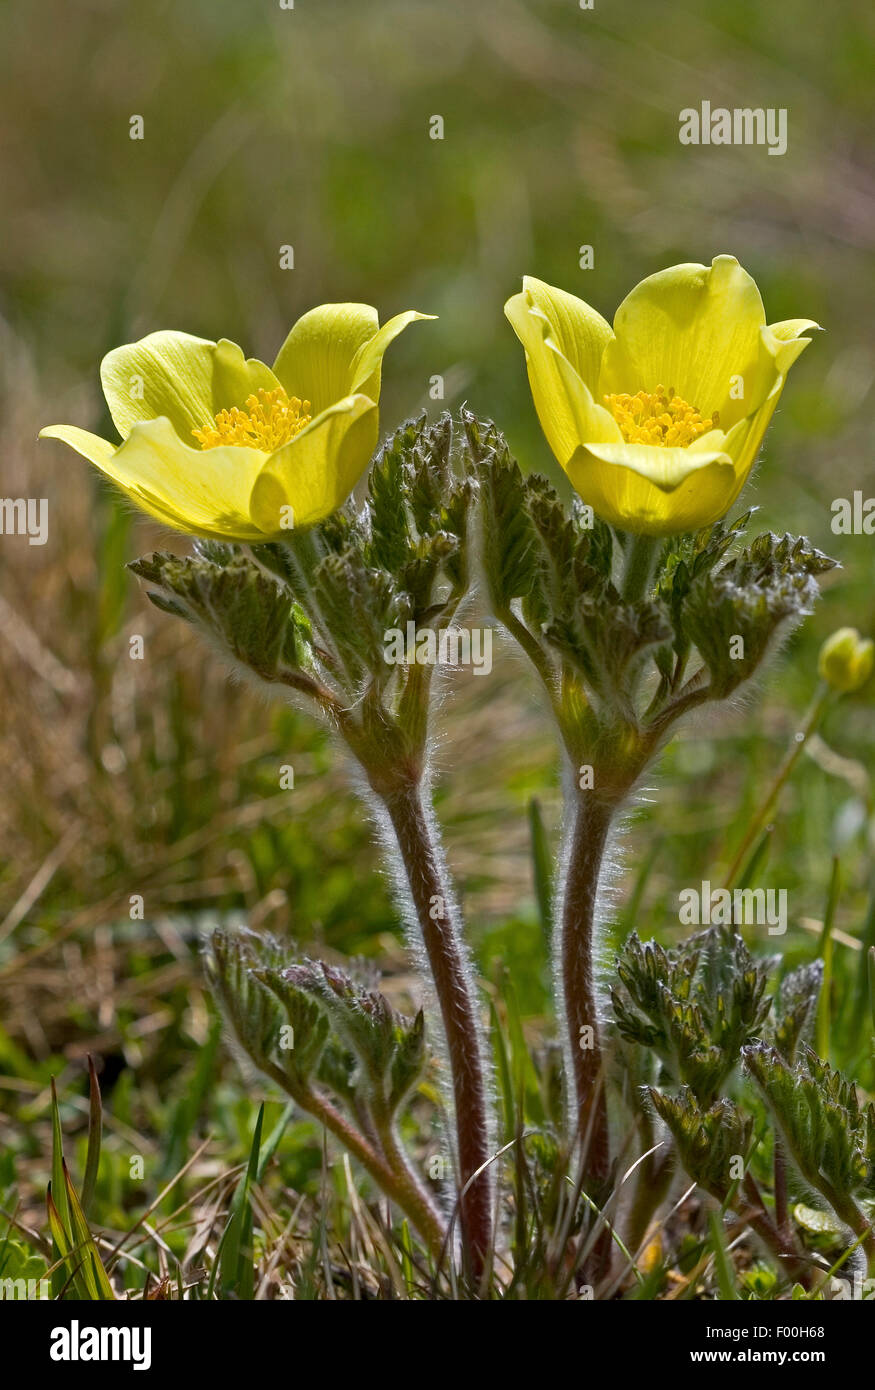 Alpine anemone, Yellow alpine anemone (Pulsatilla alpina ssp. apiifolia, Pulsatilla apiifolia), flowers, Germany Stock Photo